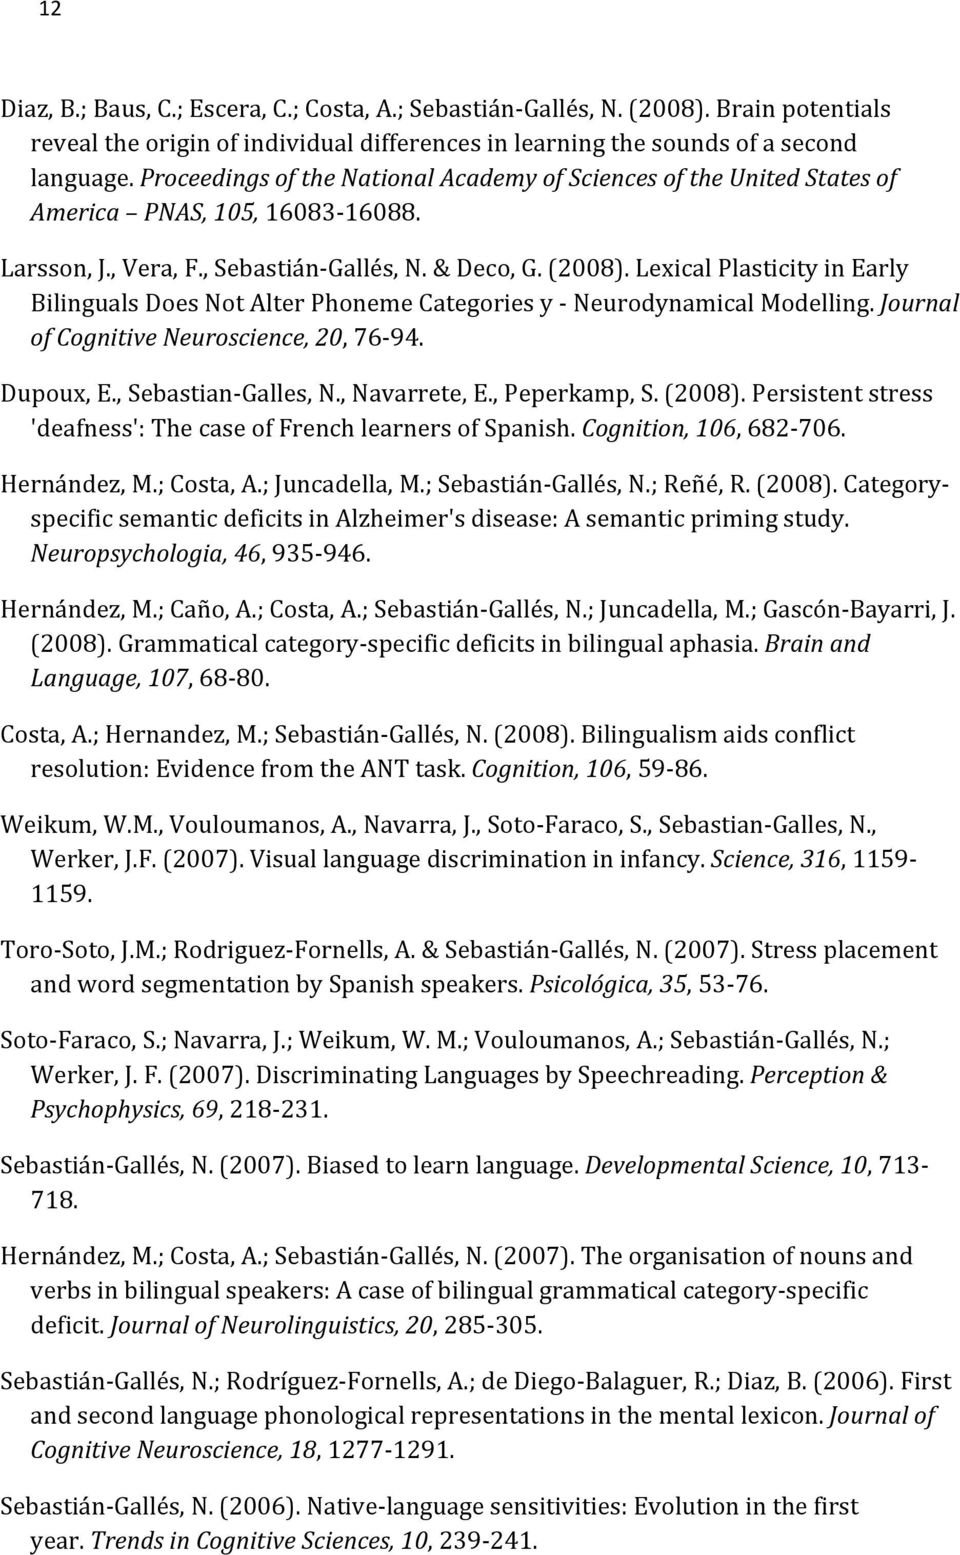 LexicalPlasticityinEarly BilingualsDoesNotAlterPhonemeCategoriesySNeurodynamicalModelling.Journal ofcognitiveneuroscience,20,76s94. Dupoux,E.,SebastianSGalles,N.,Navarrete,E.,Peperkamp,S.(2008).